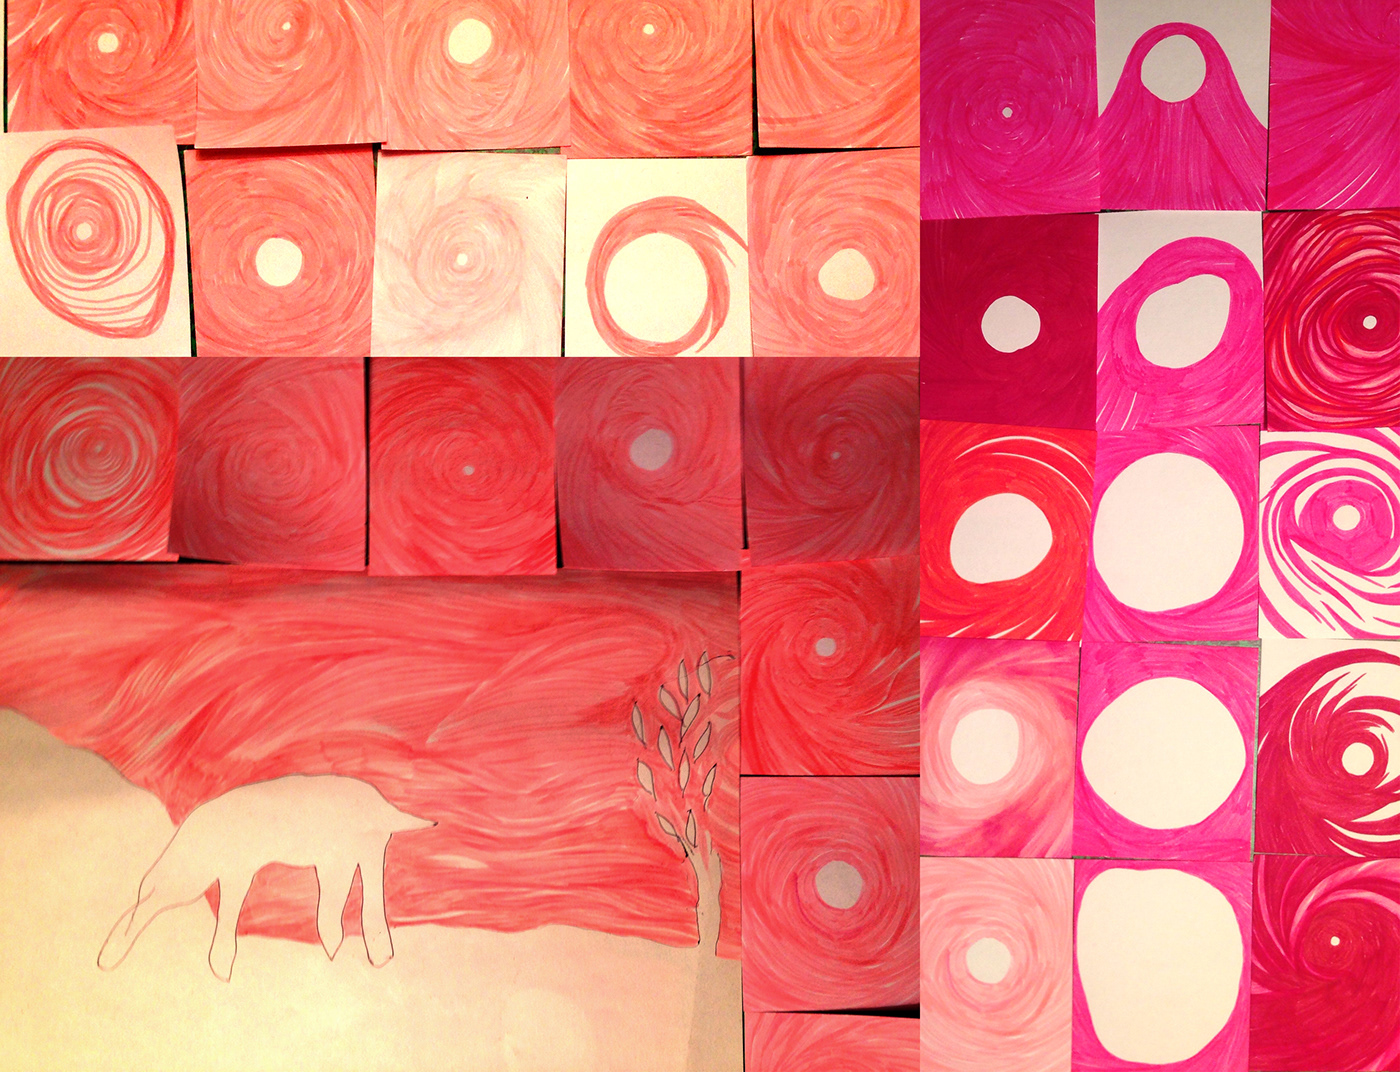 unity dessin contemporain metaphysic pink Love experimental cycle transe joy hanoun